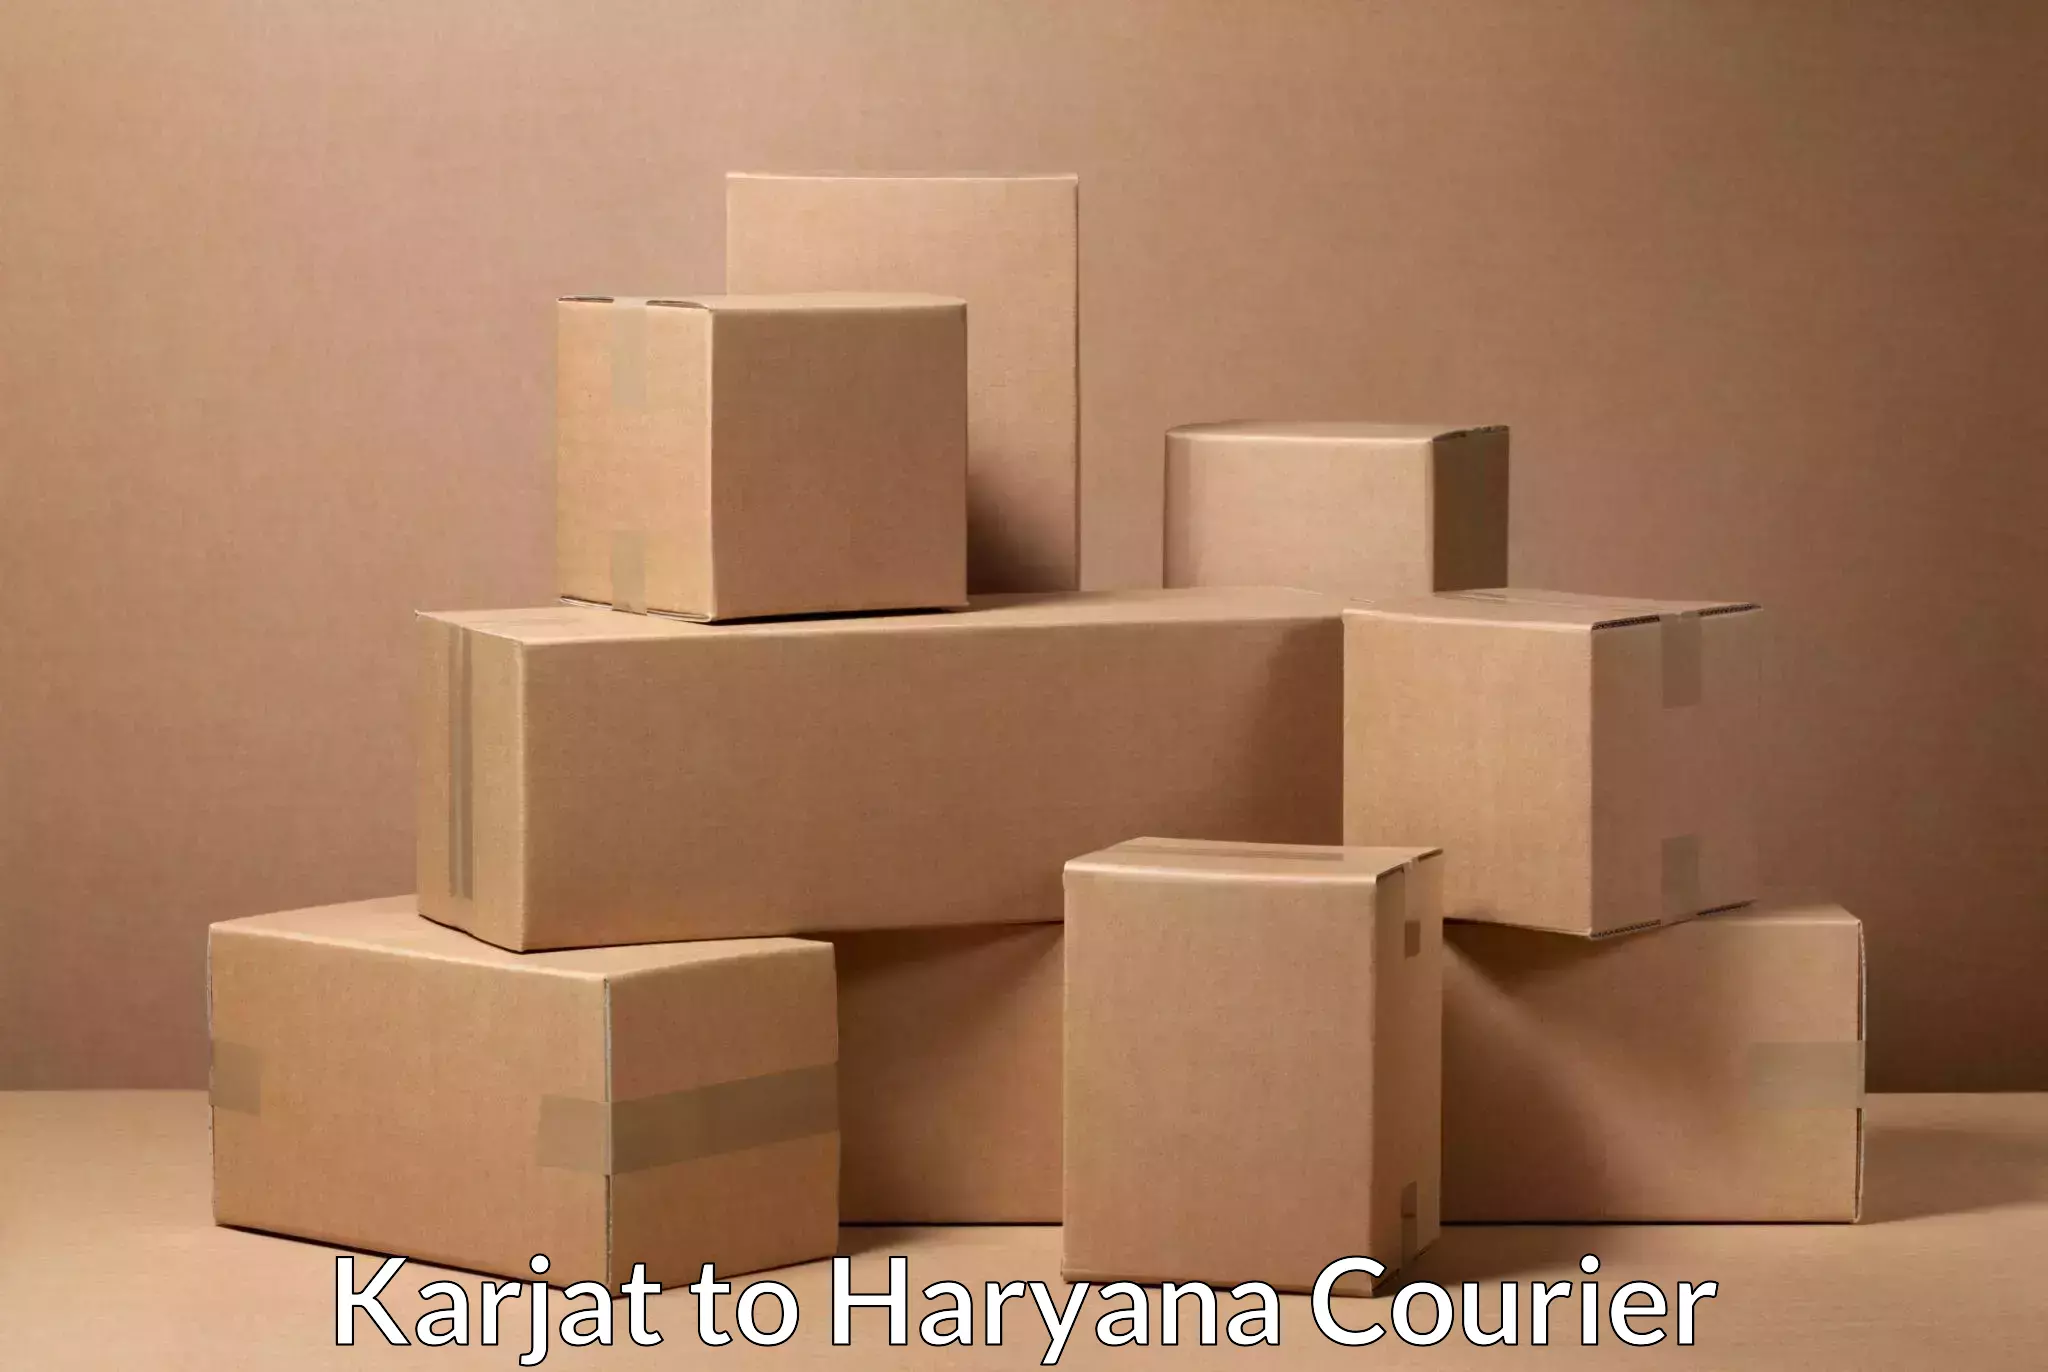 Quick dispatch service Karjat to Haryana